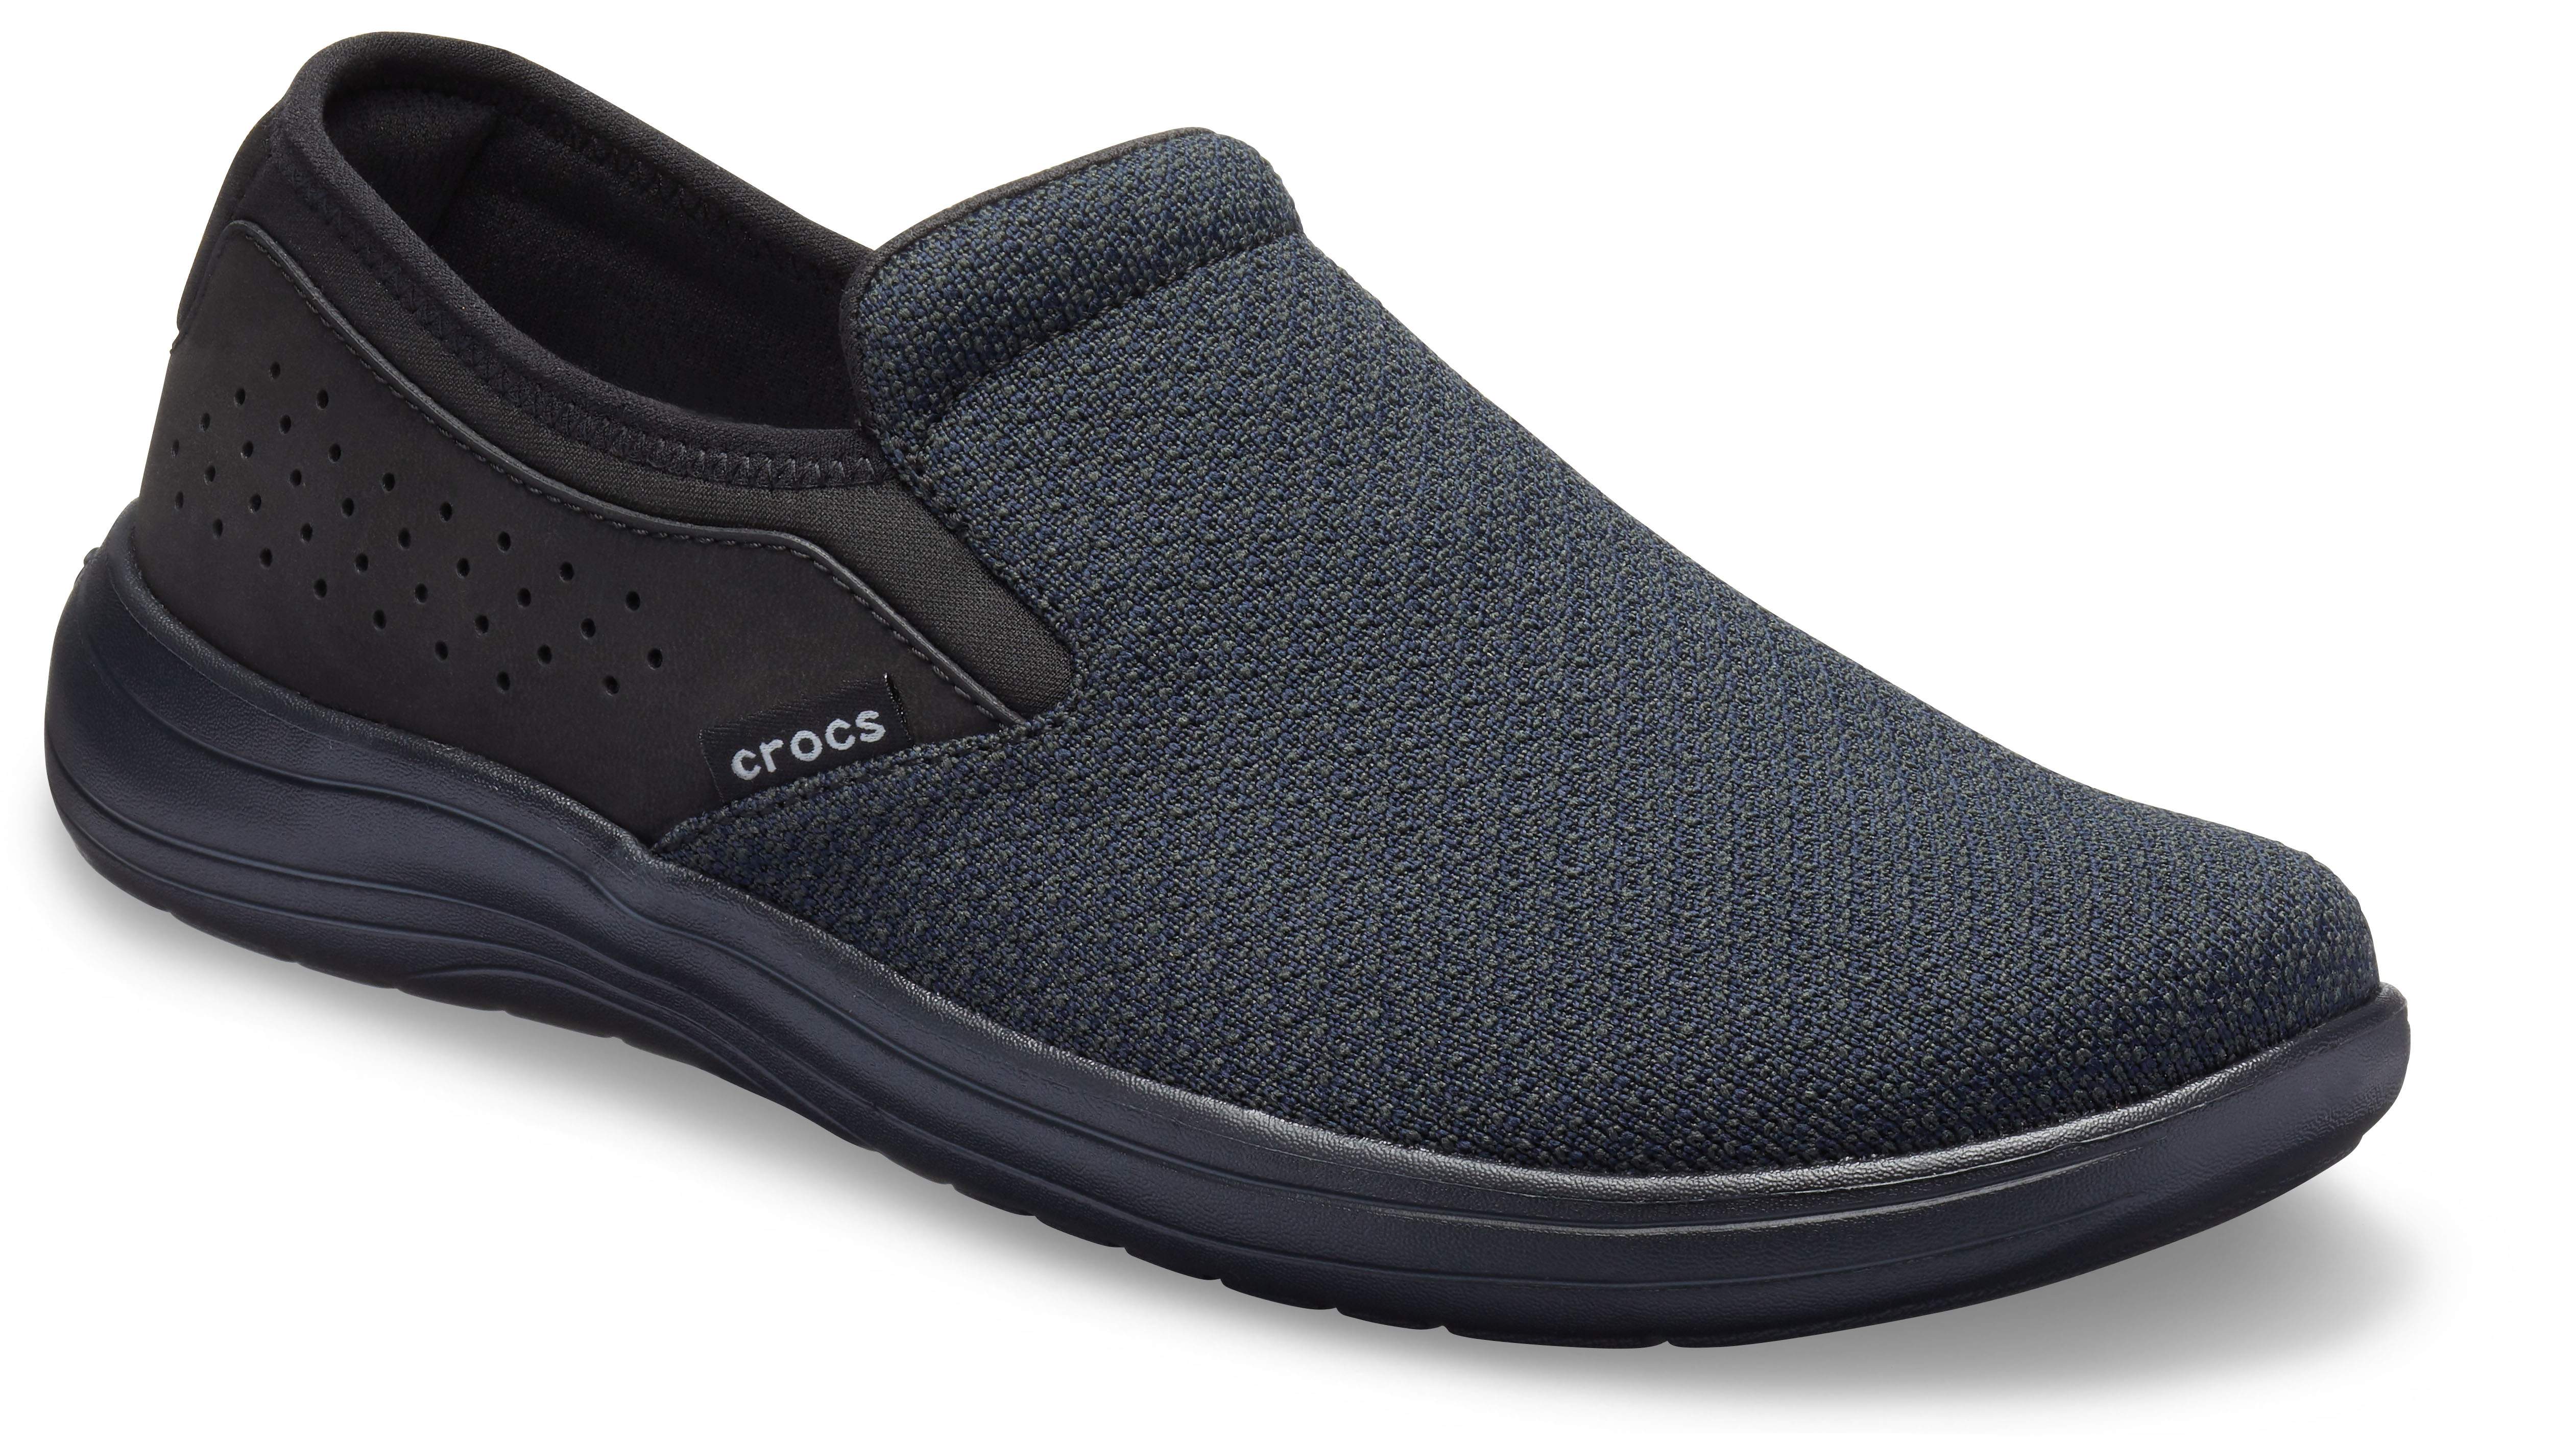 crocs men's slip on shoes